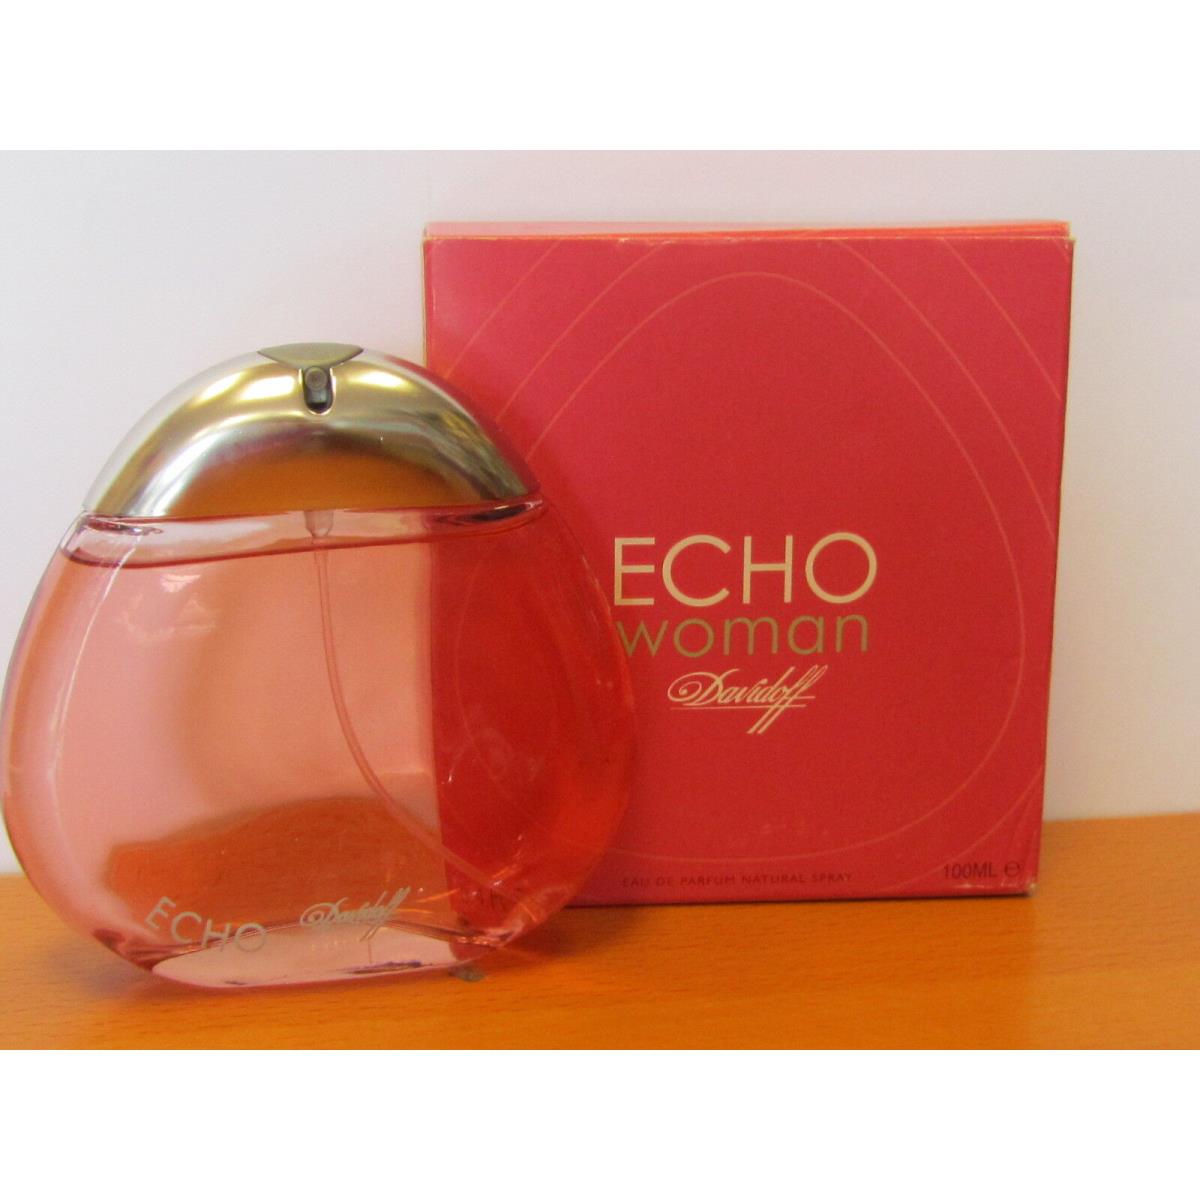 Echo By Davidoff Perfume Women 3.4oz/100 ml Eau De Parfum Spray Sealed